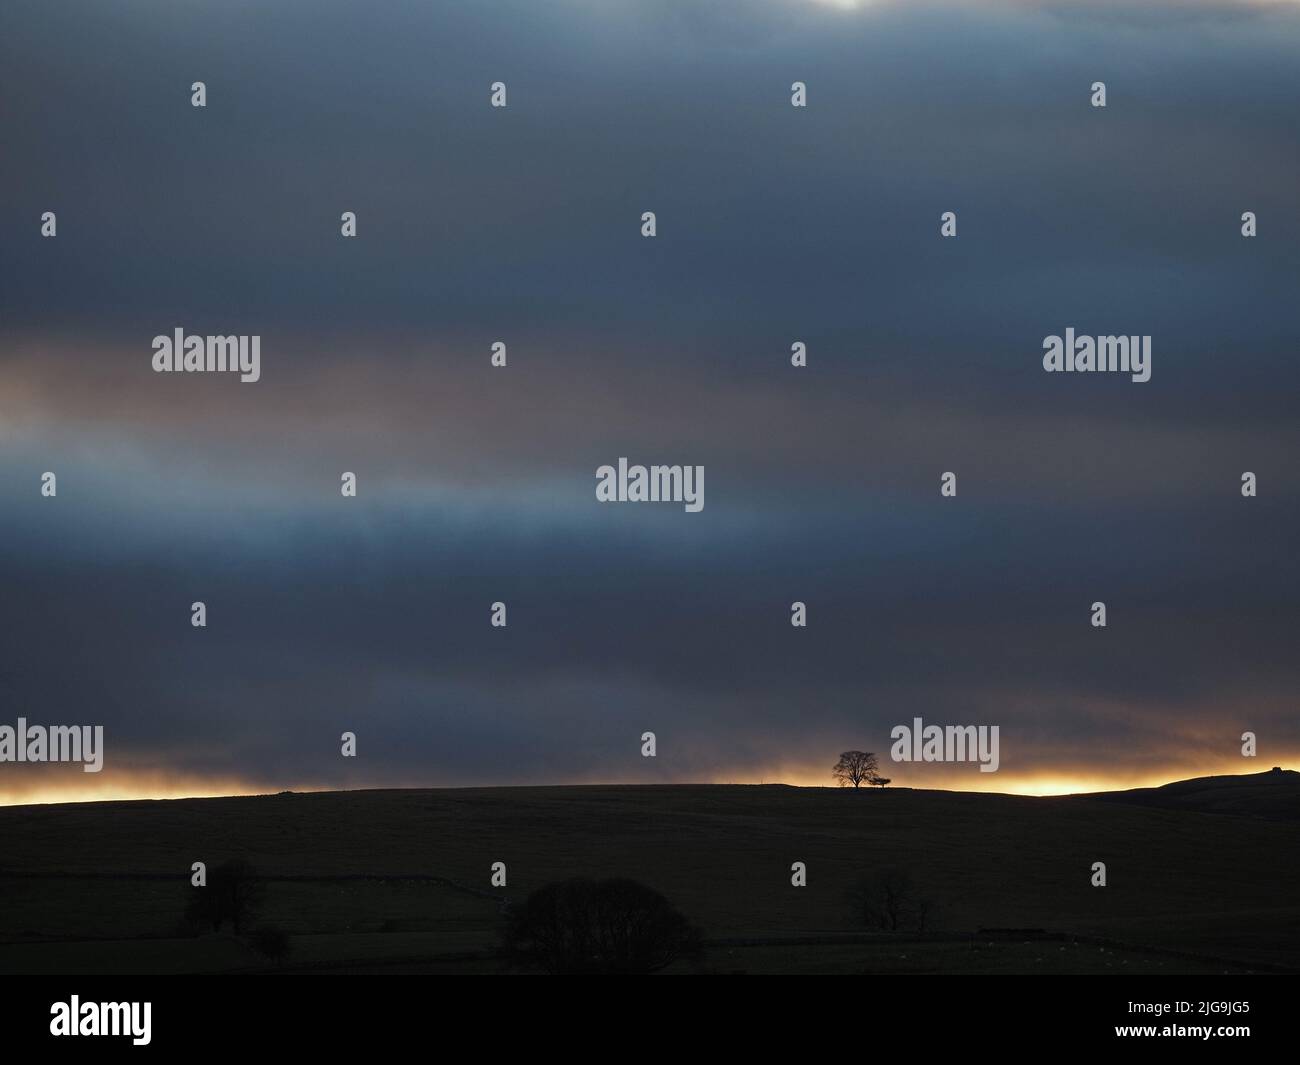 Winter landscape - golden sliver of light illuminates stark tree silhouettes on Cumbrian skyline below brooding blue grey sky at dusk - England, UK Stock Photo